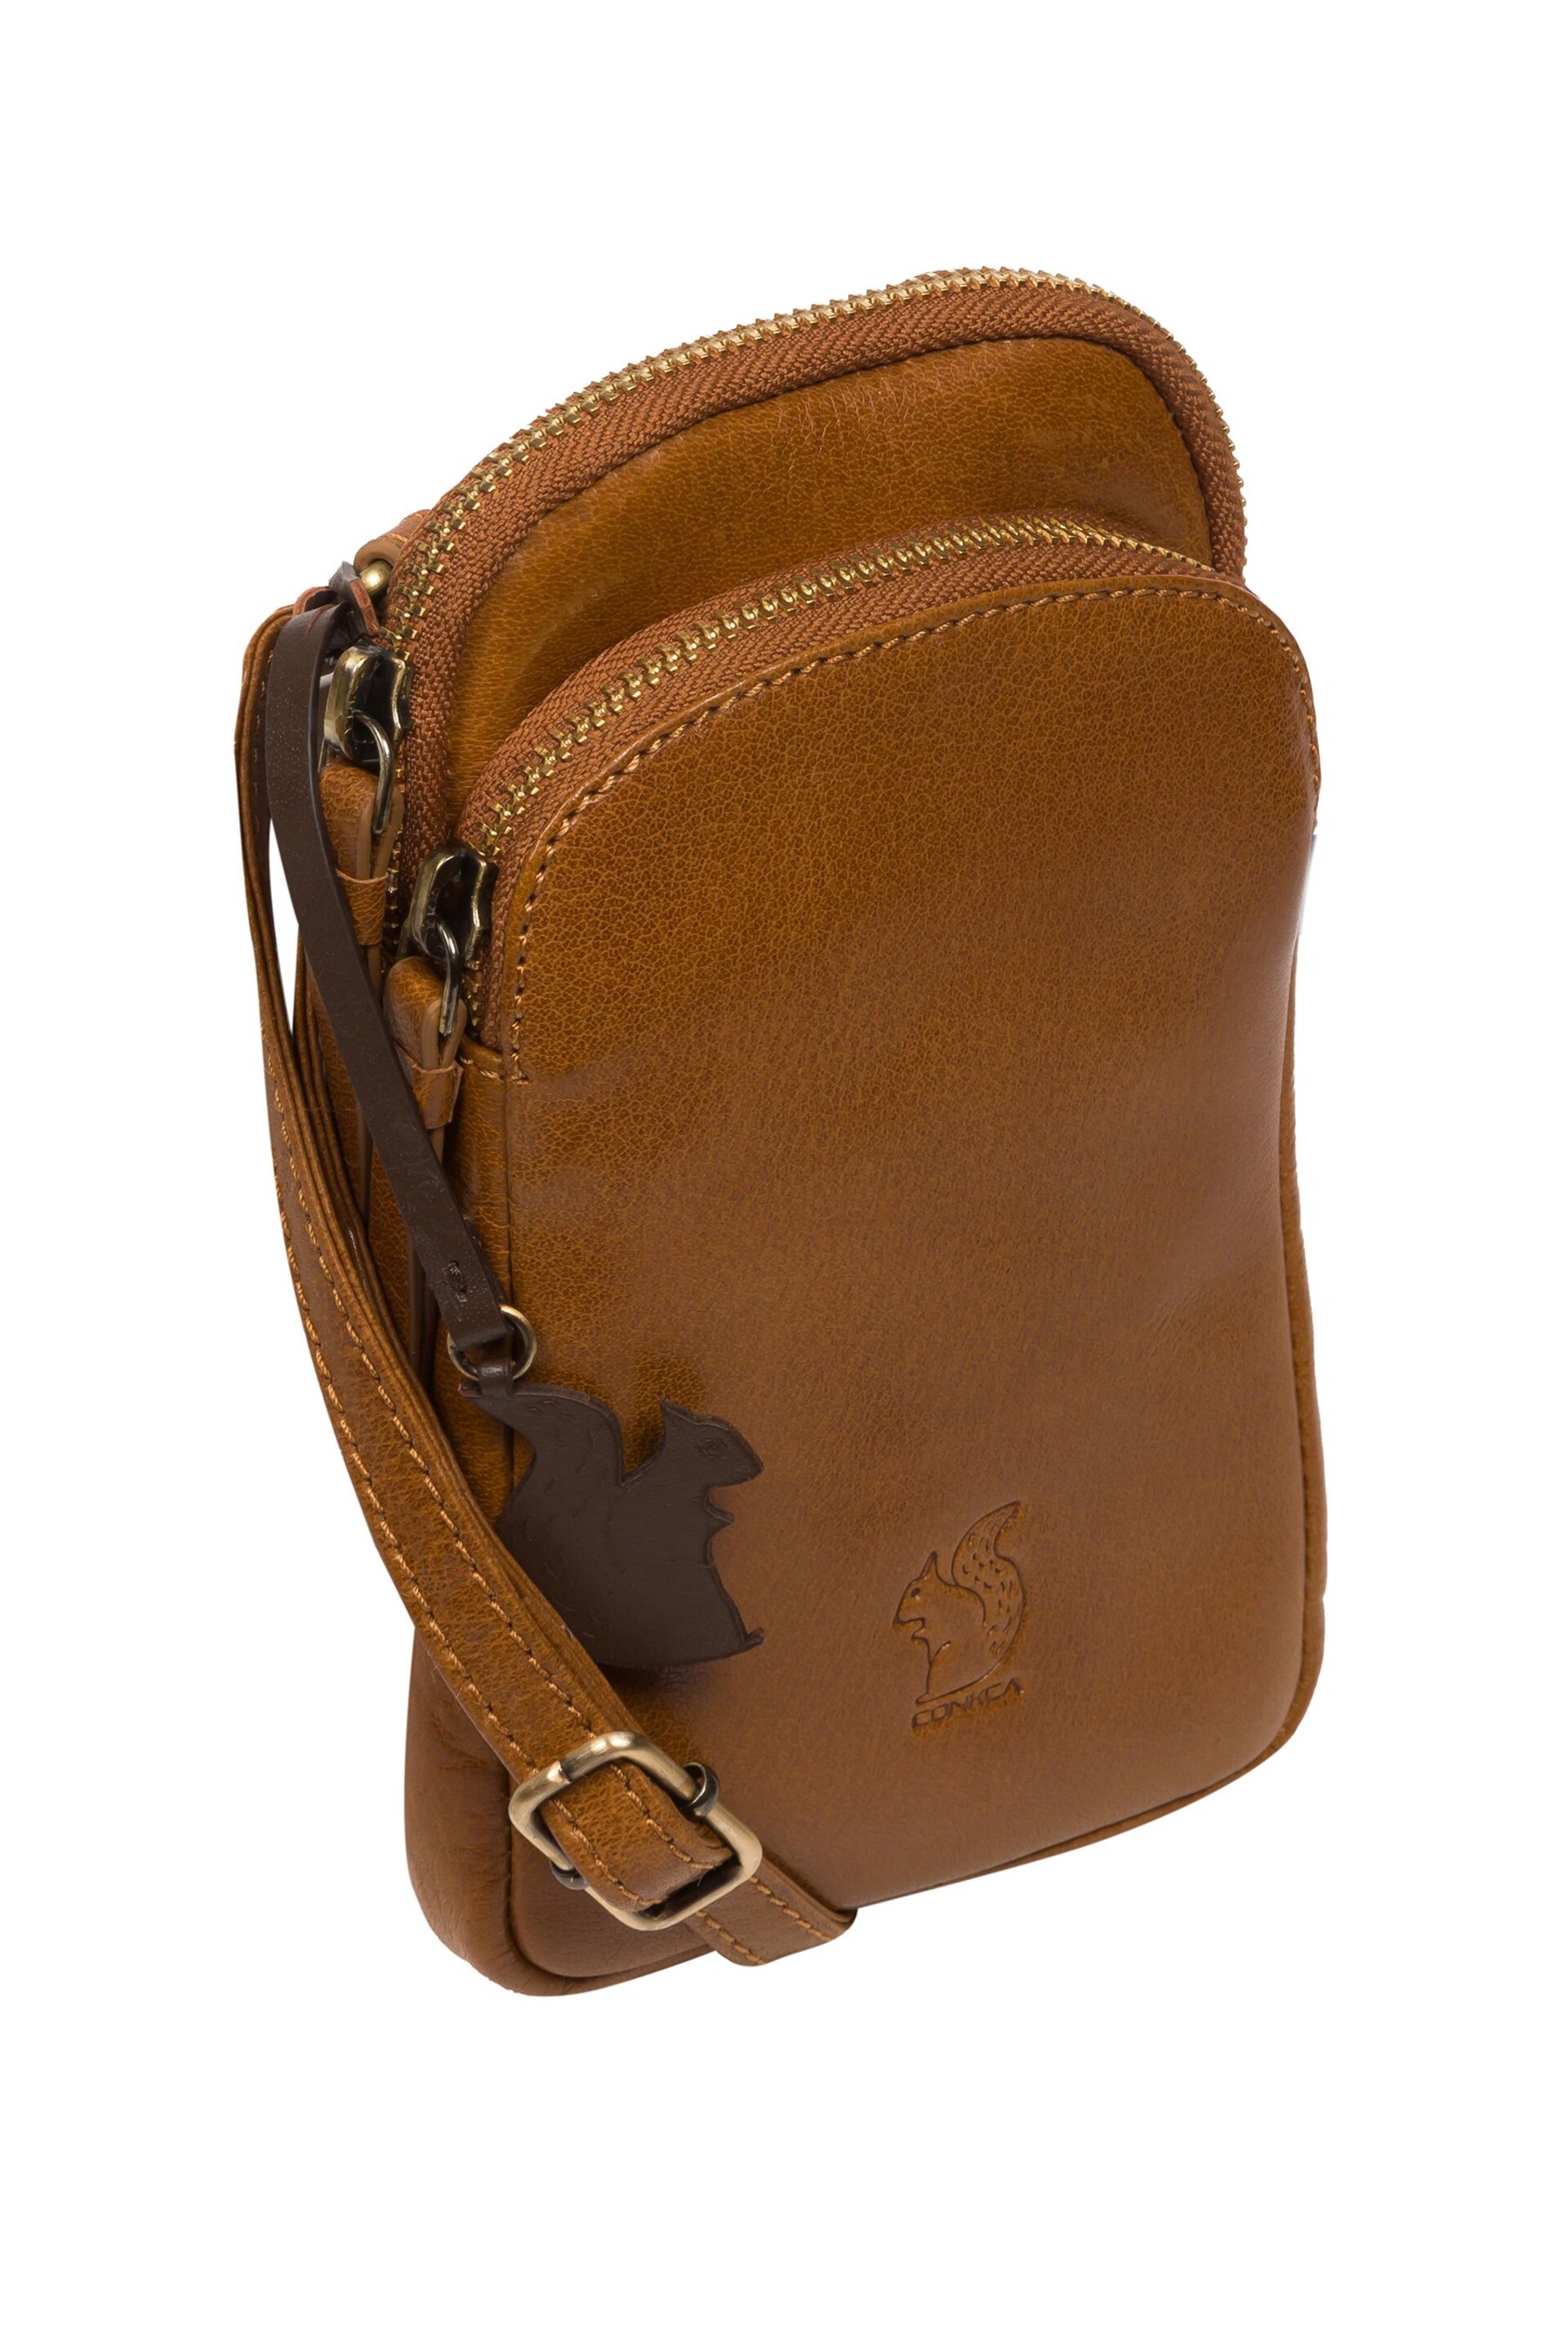 Conkca 'Leia' Leather Cross-Body Phone Bag - Image 6 of 8